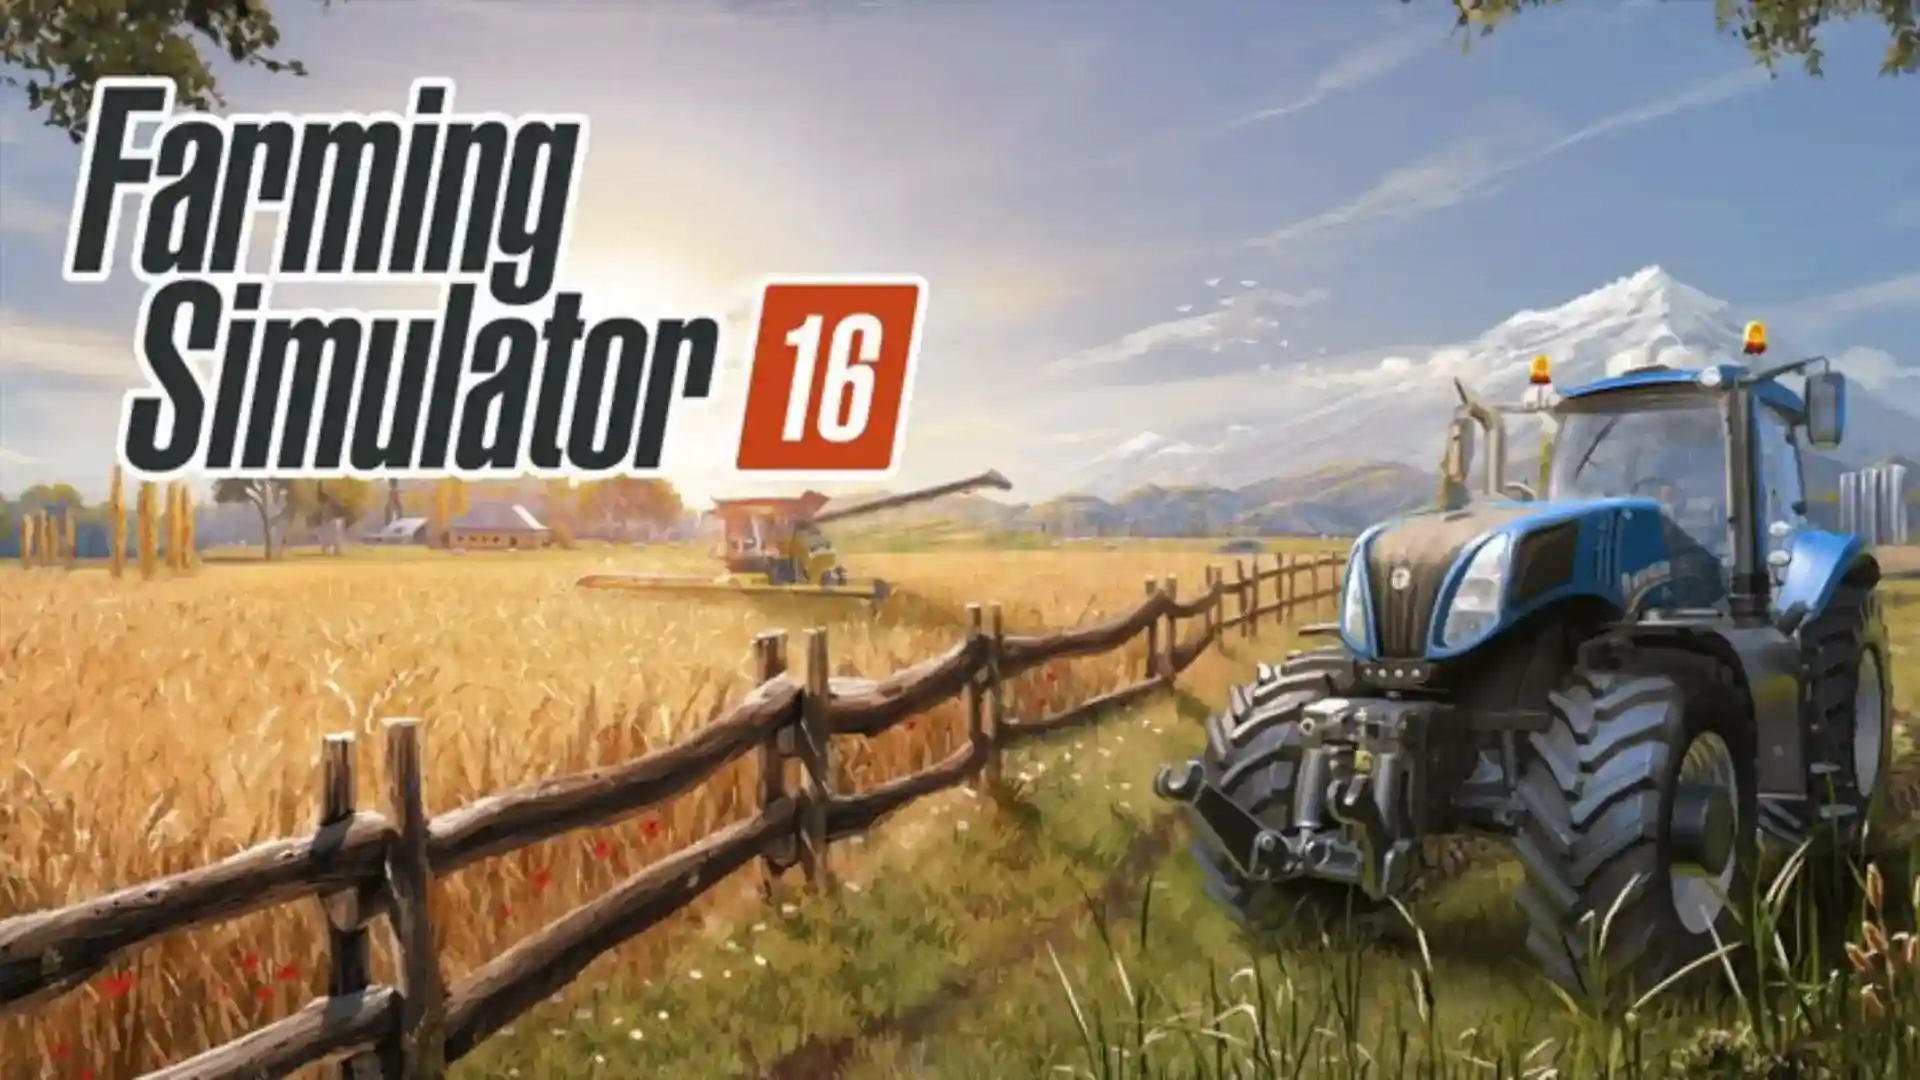 Farming Simulator 16 feature image